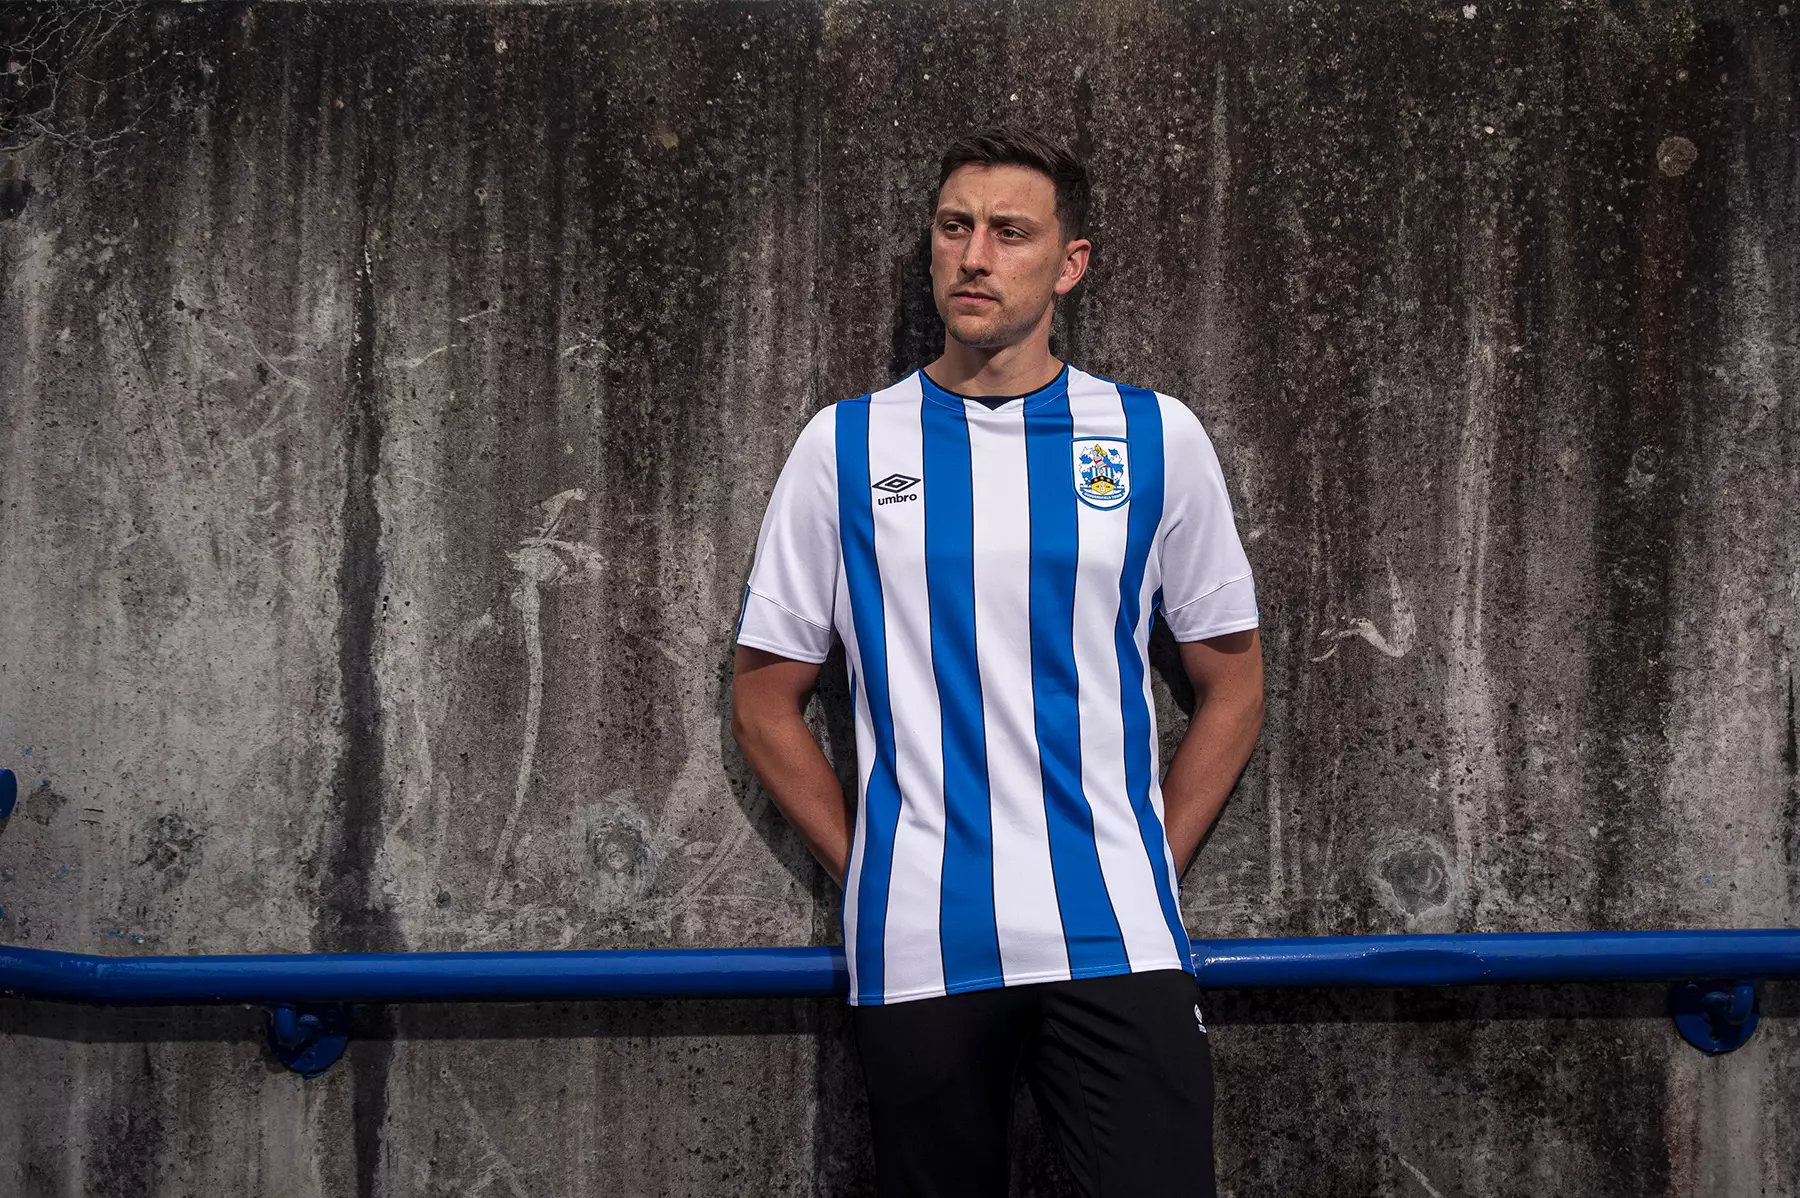 Huddersfield kit has no sponsor on it. Image: PA Images